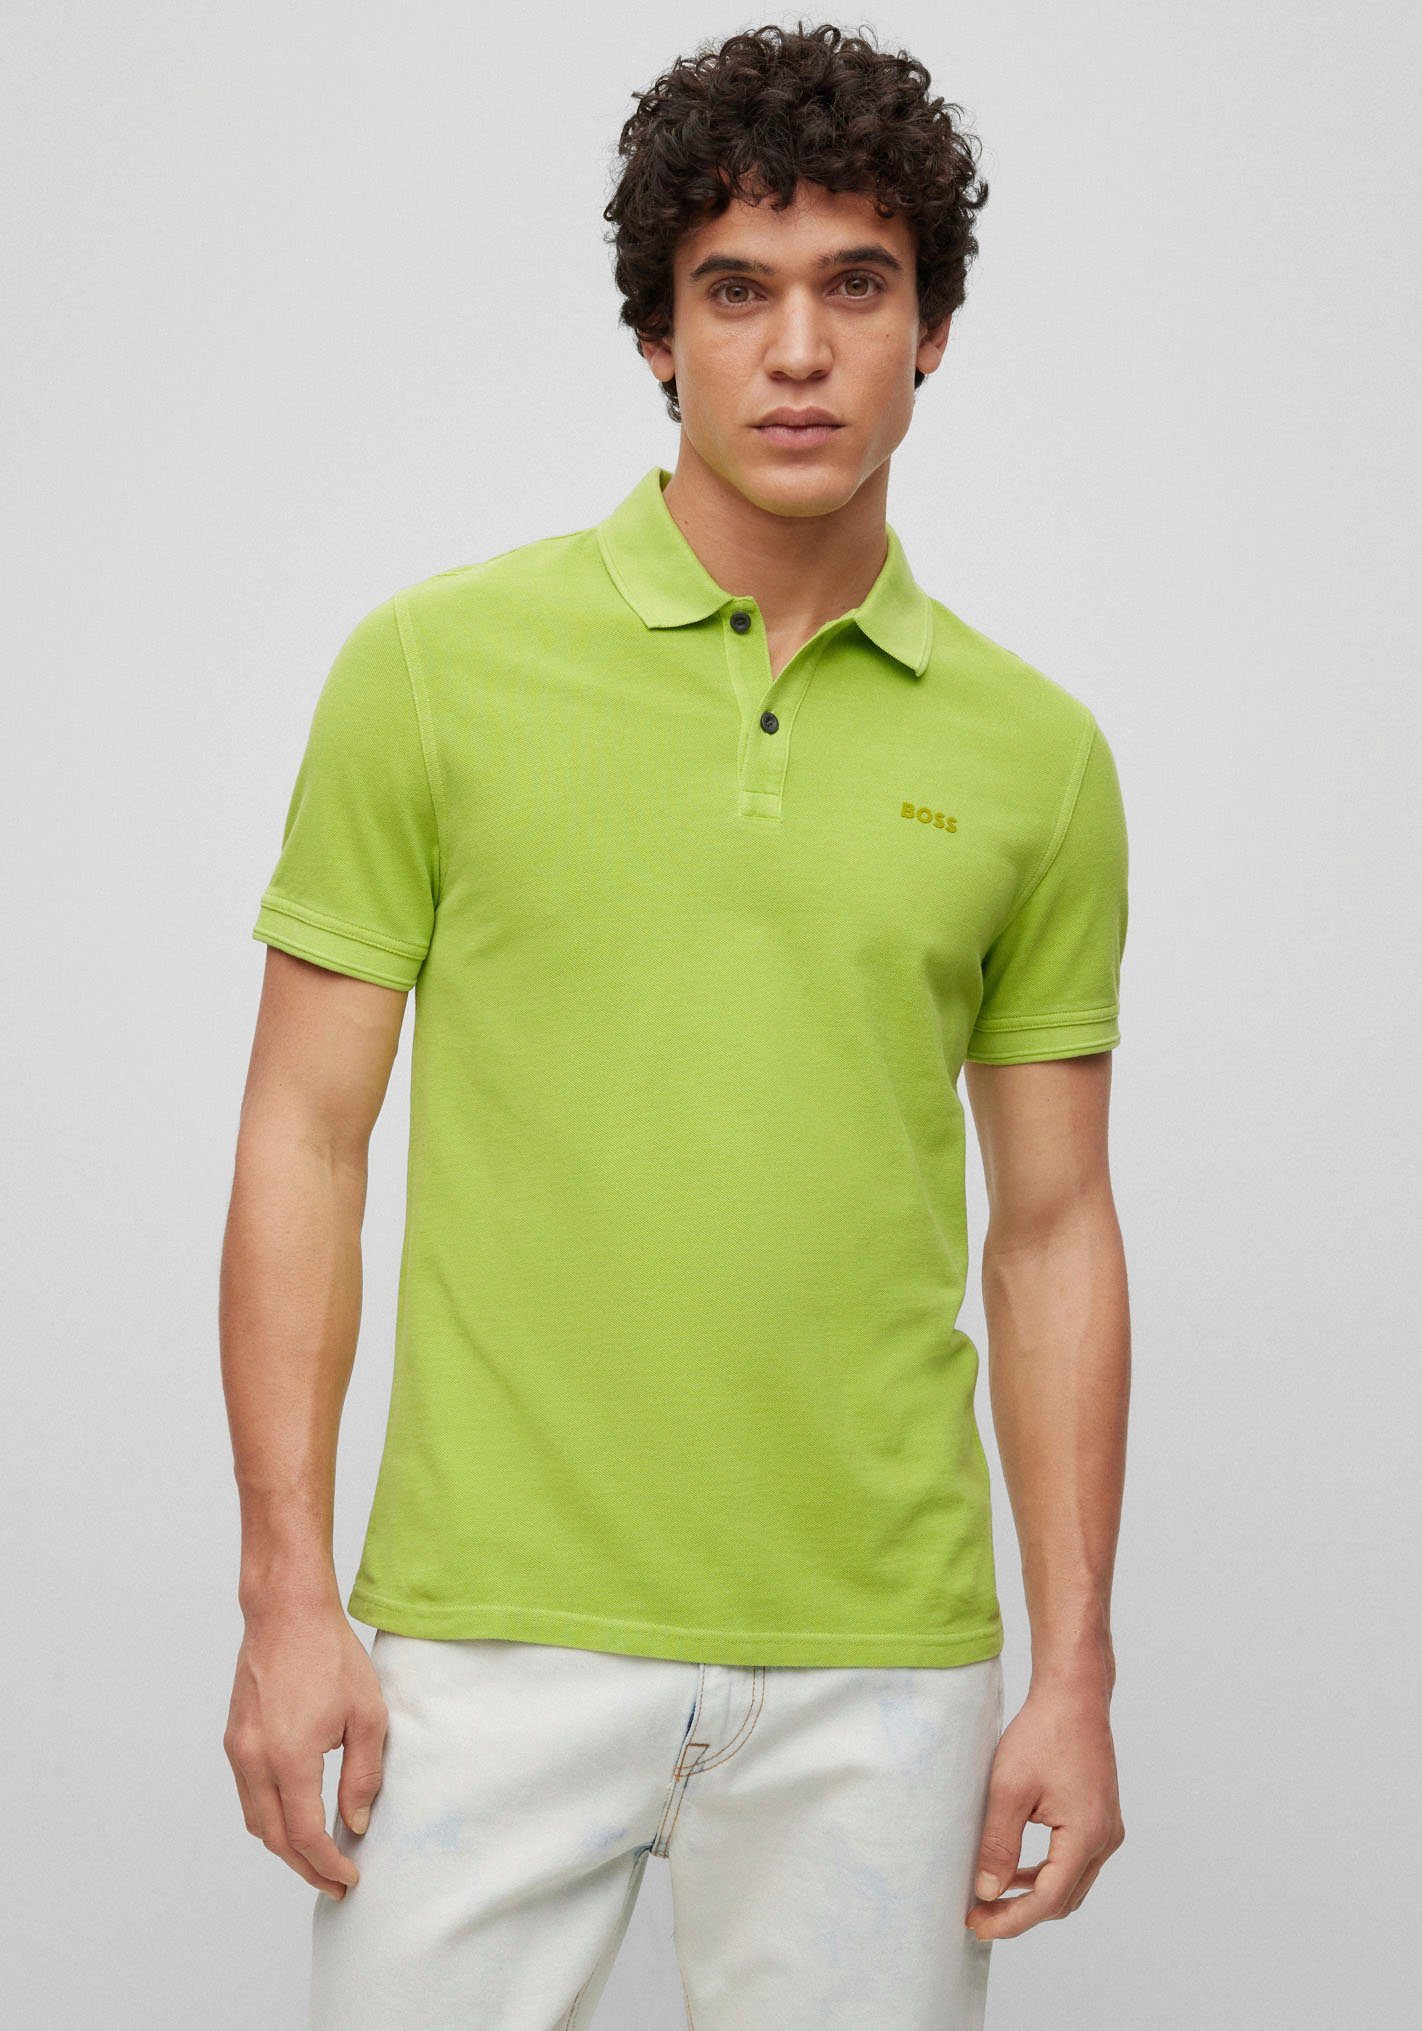 BOSS Green Prime Logoschriftzug am Bright ORANGE mit Poloshirt Brustkorb